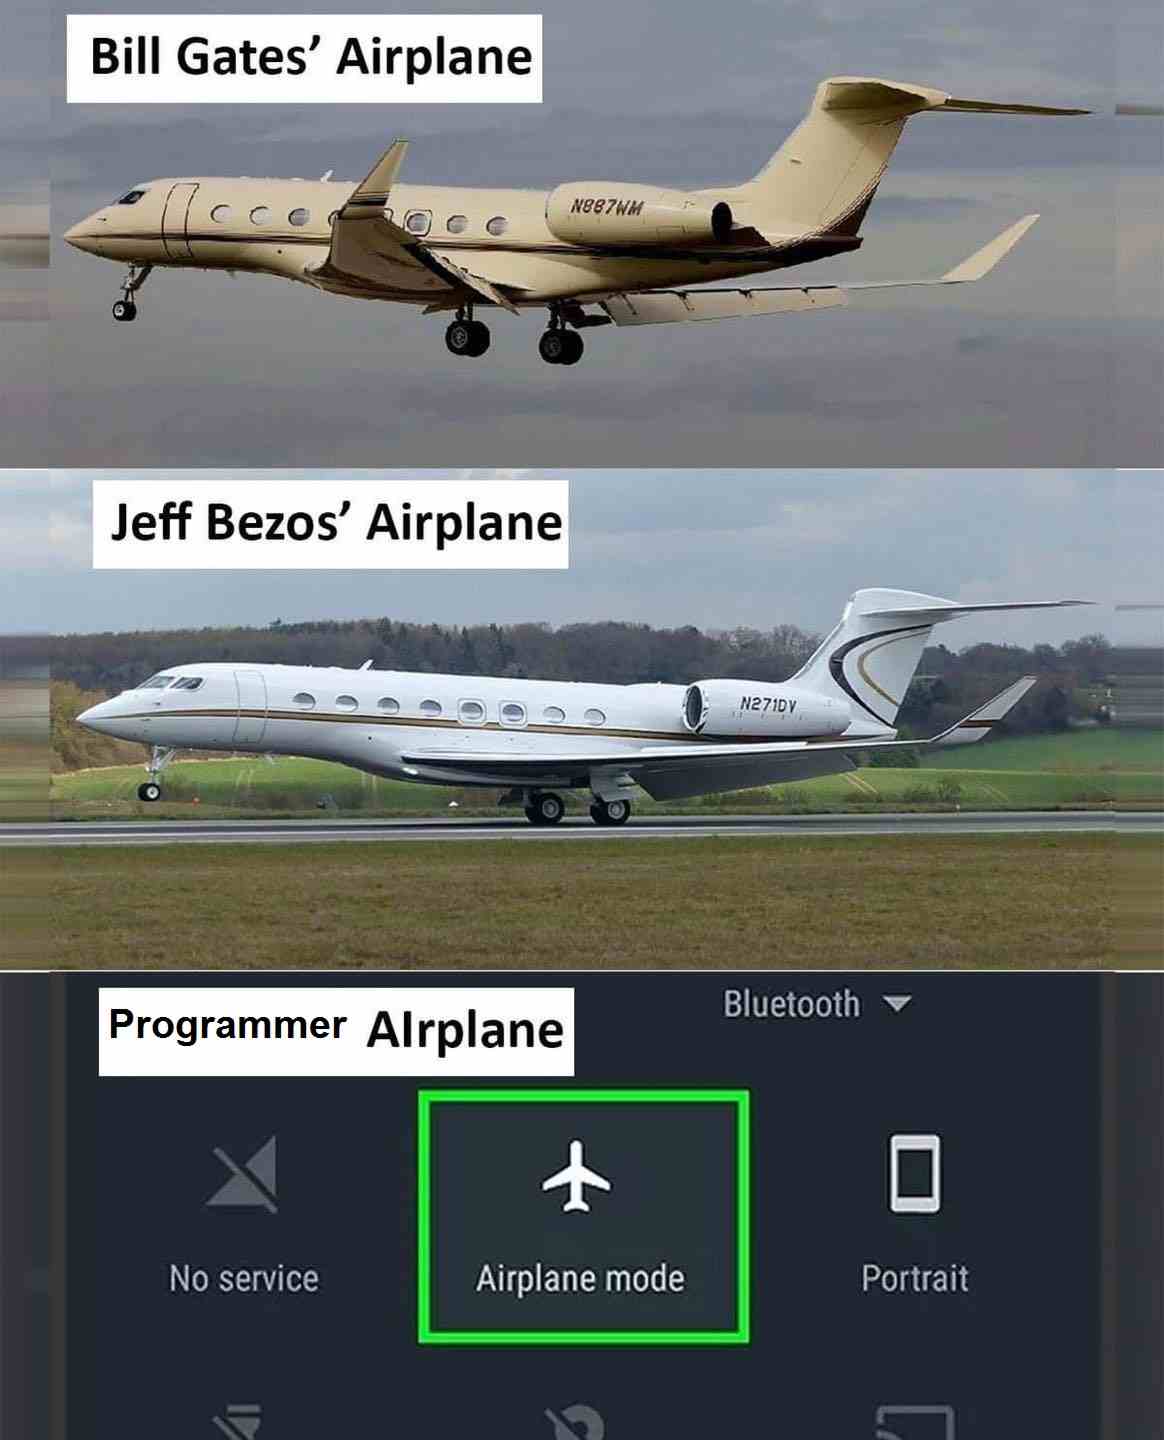 Bill Gates' Airplane vs Programmer Airplane